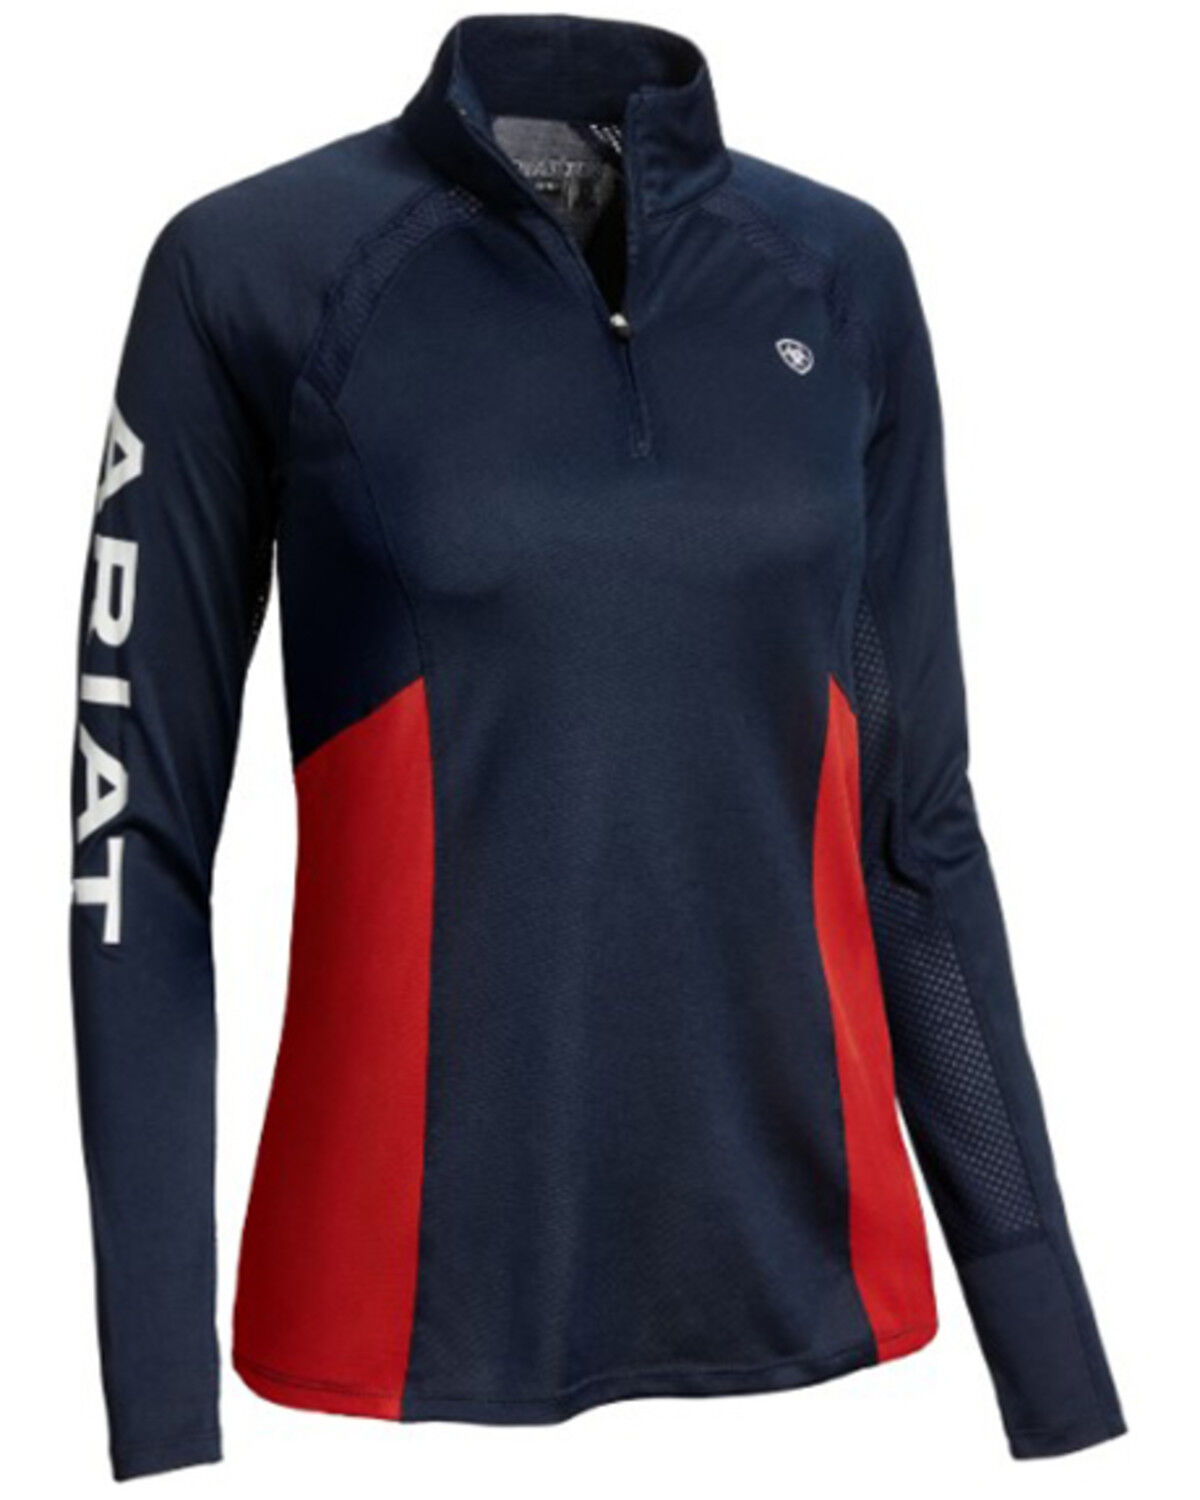 Ariat Conquest 2.0 1/4 1/2 Zip Sweatshirt Team Top ladies navy blue sizes S L 